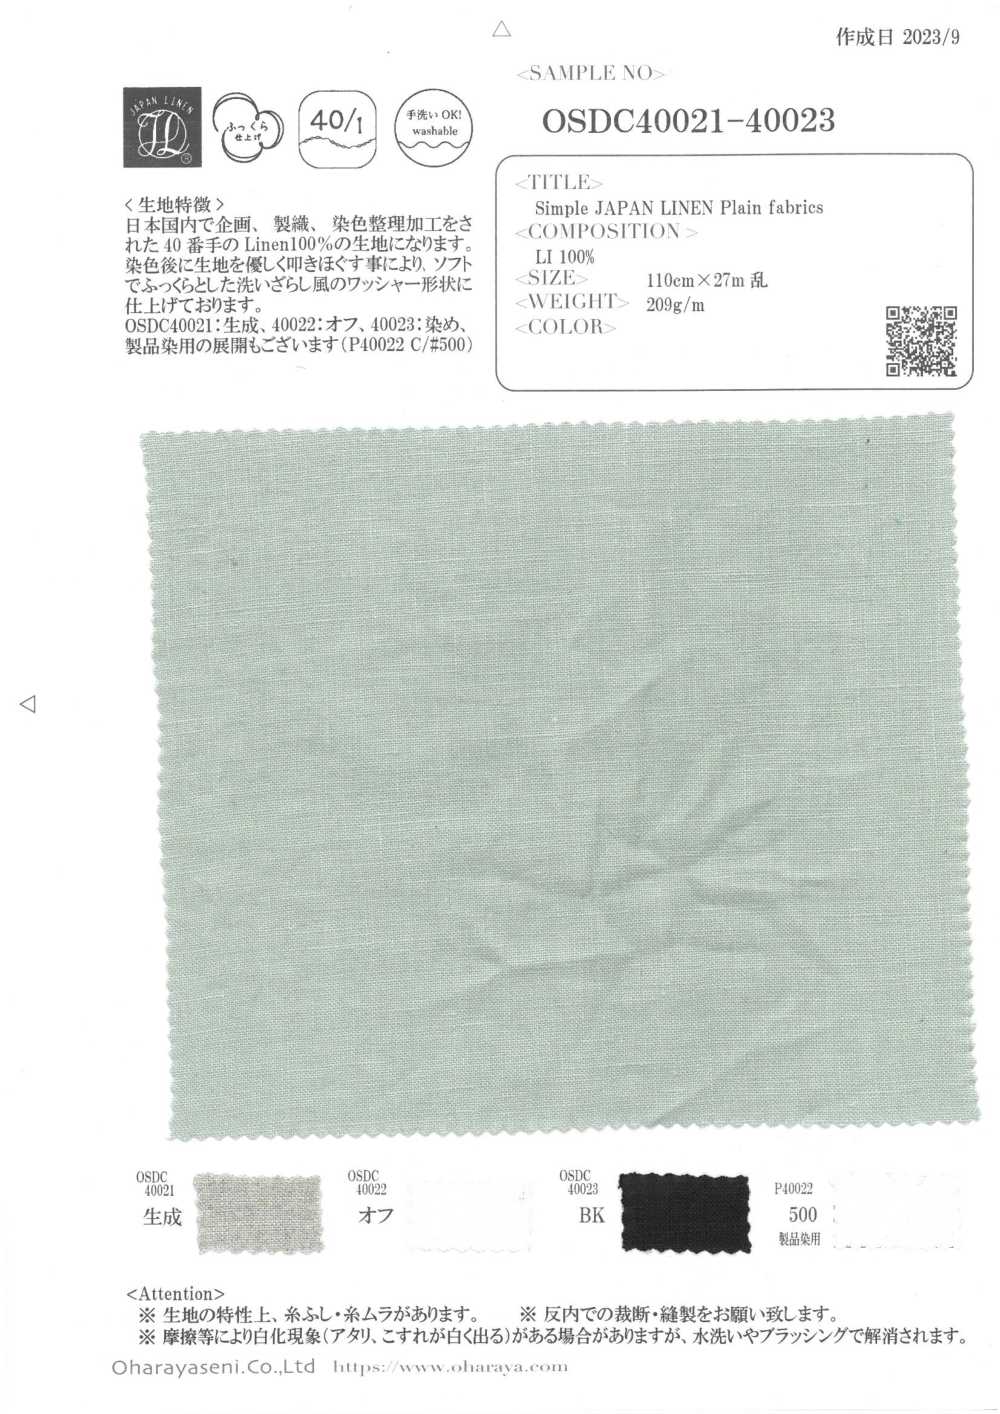 OSDC40022 Einfache JAPAN LEINEN Unistoffe (Aus)[Textilgewebe] Oharayaseni